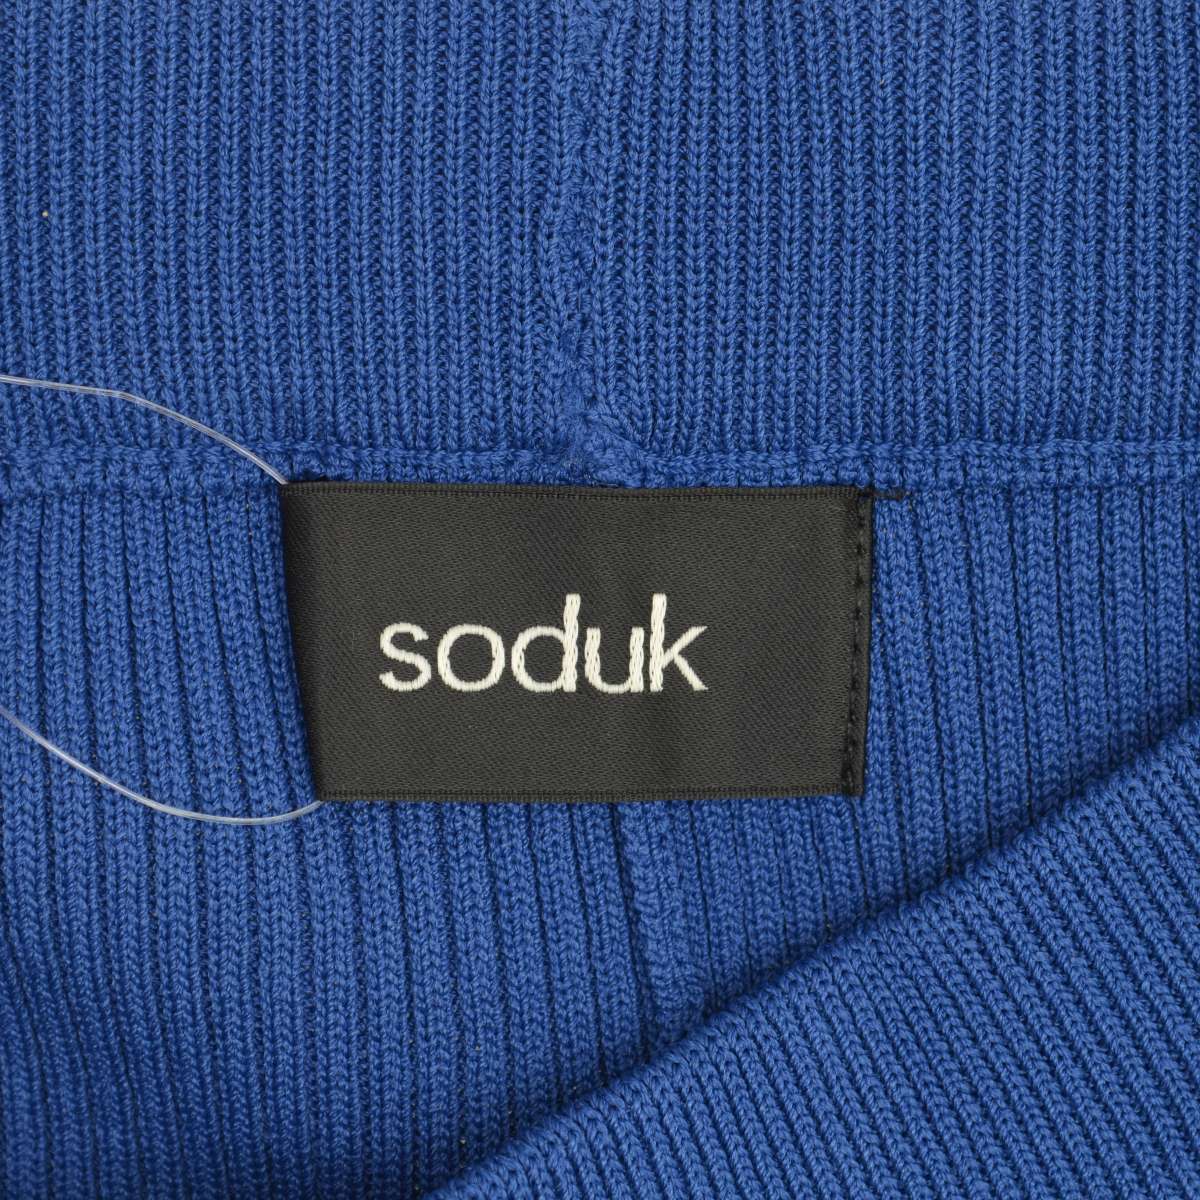 soduk / スドーク 0419030503 slit knit trousers パンツ -ブランド古着の買取販売カンフル